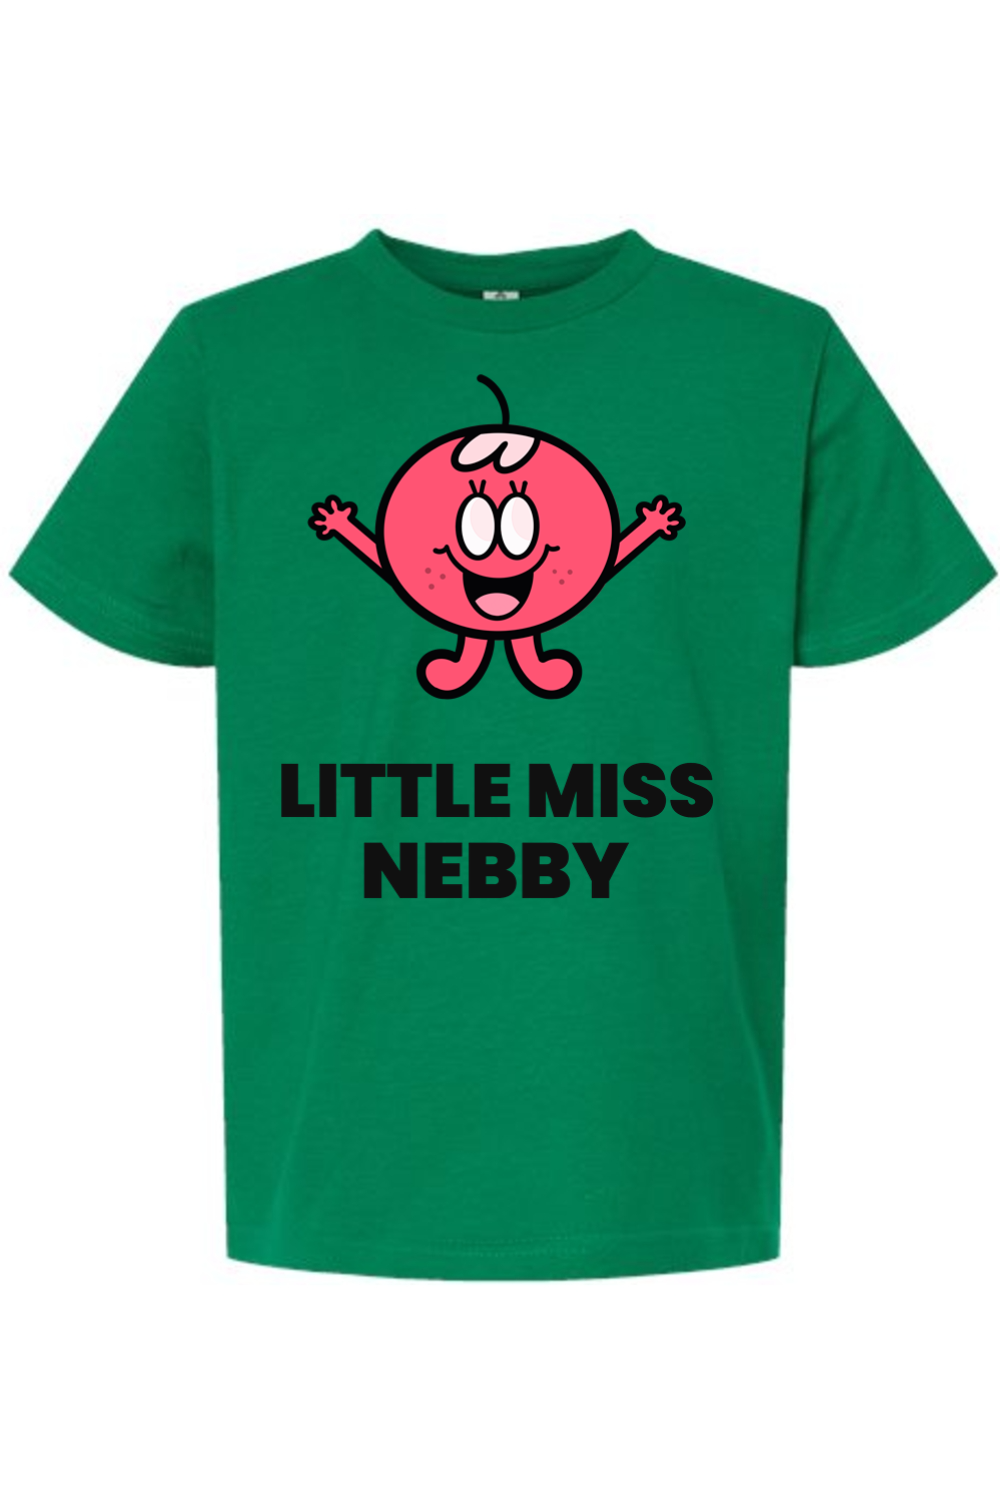 Little Miss Nebby - Kids Tee - Yinzylvania